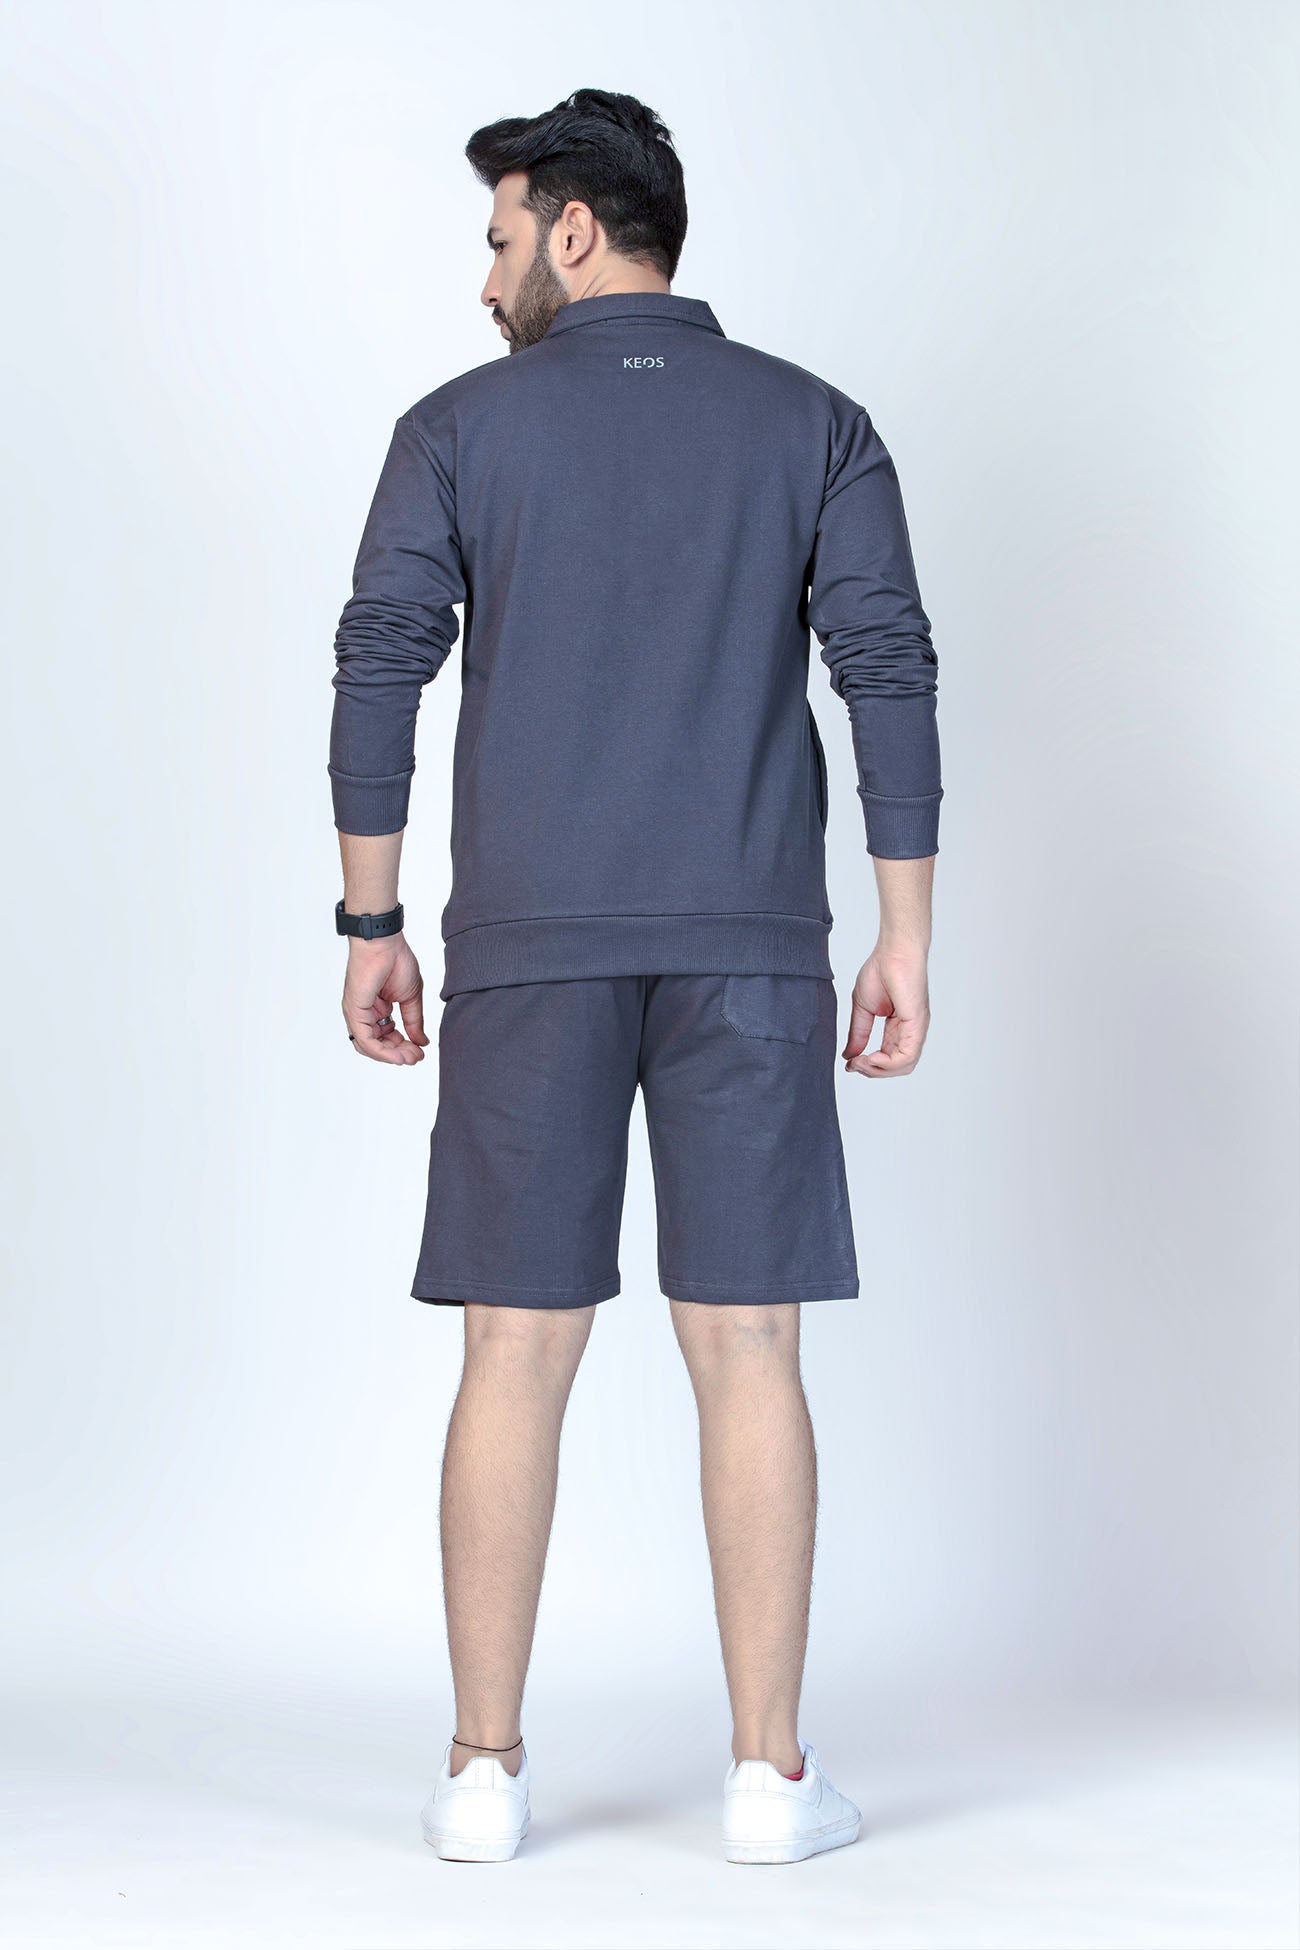 Zipper Sweatshirt Co-ord Set - Dark Grey - keos.life